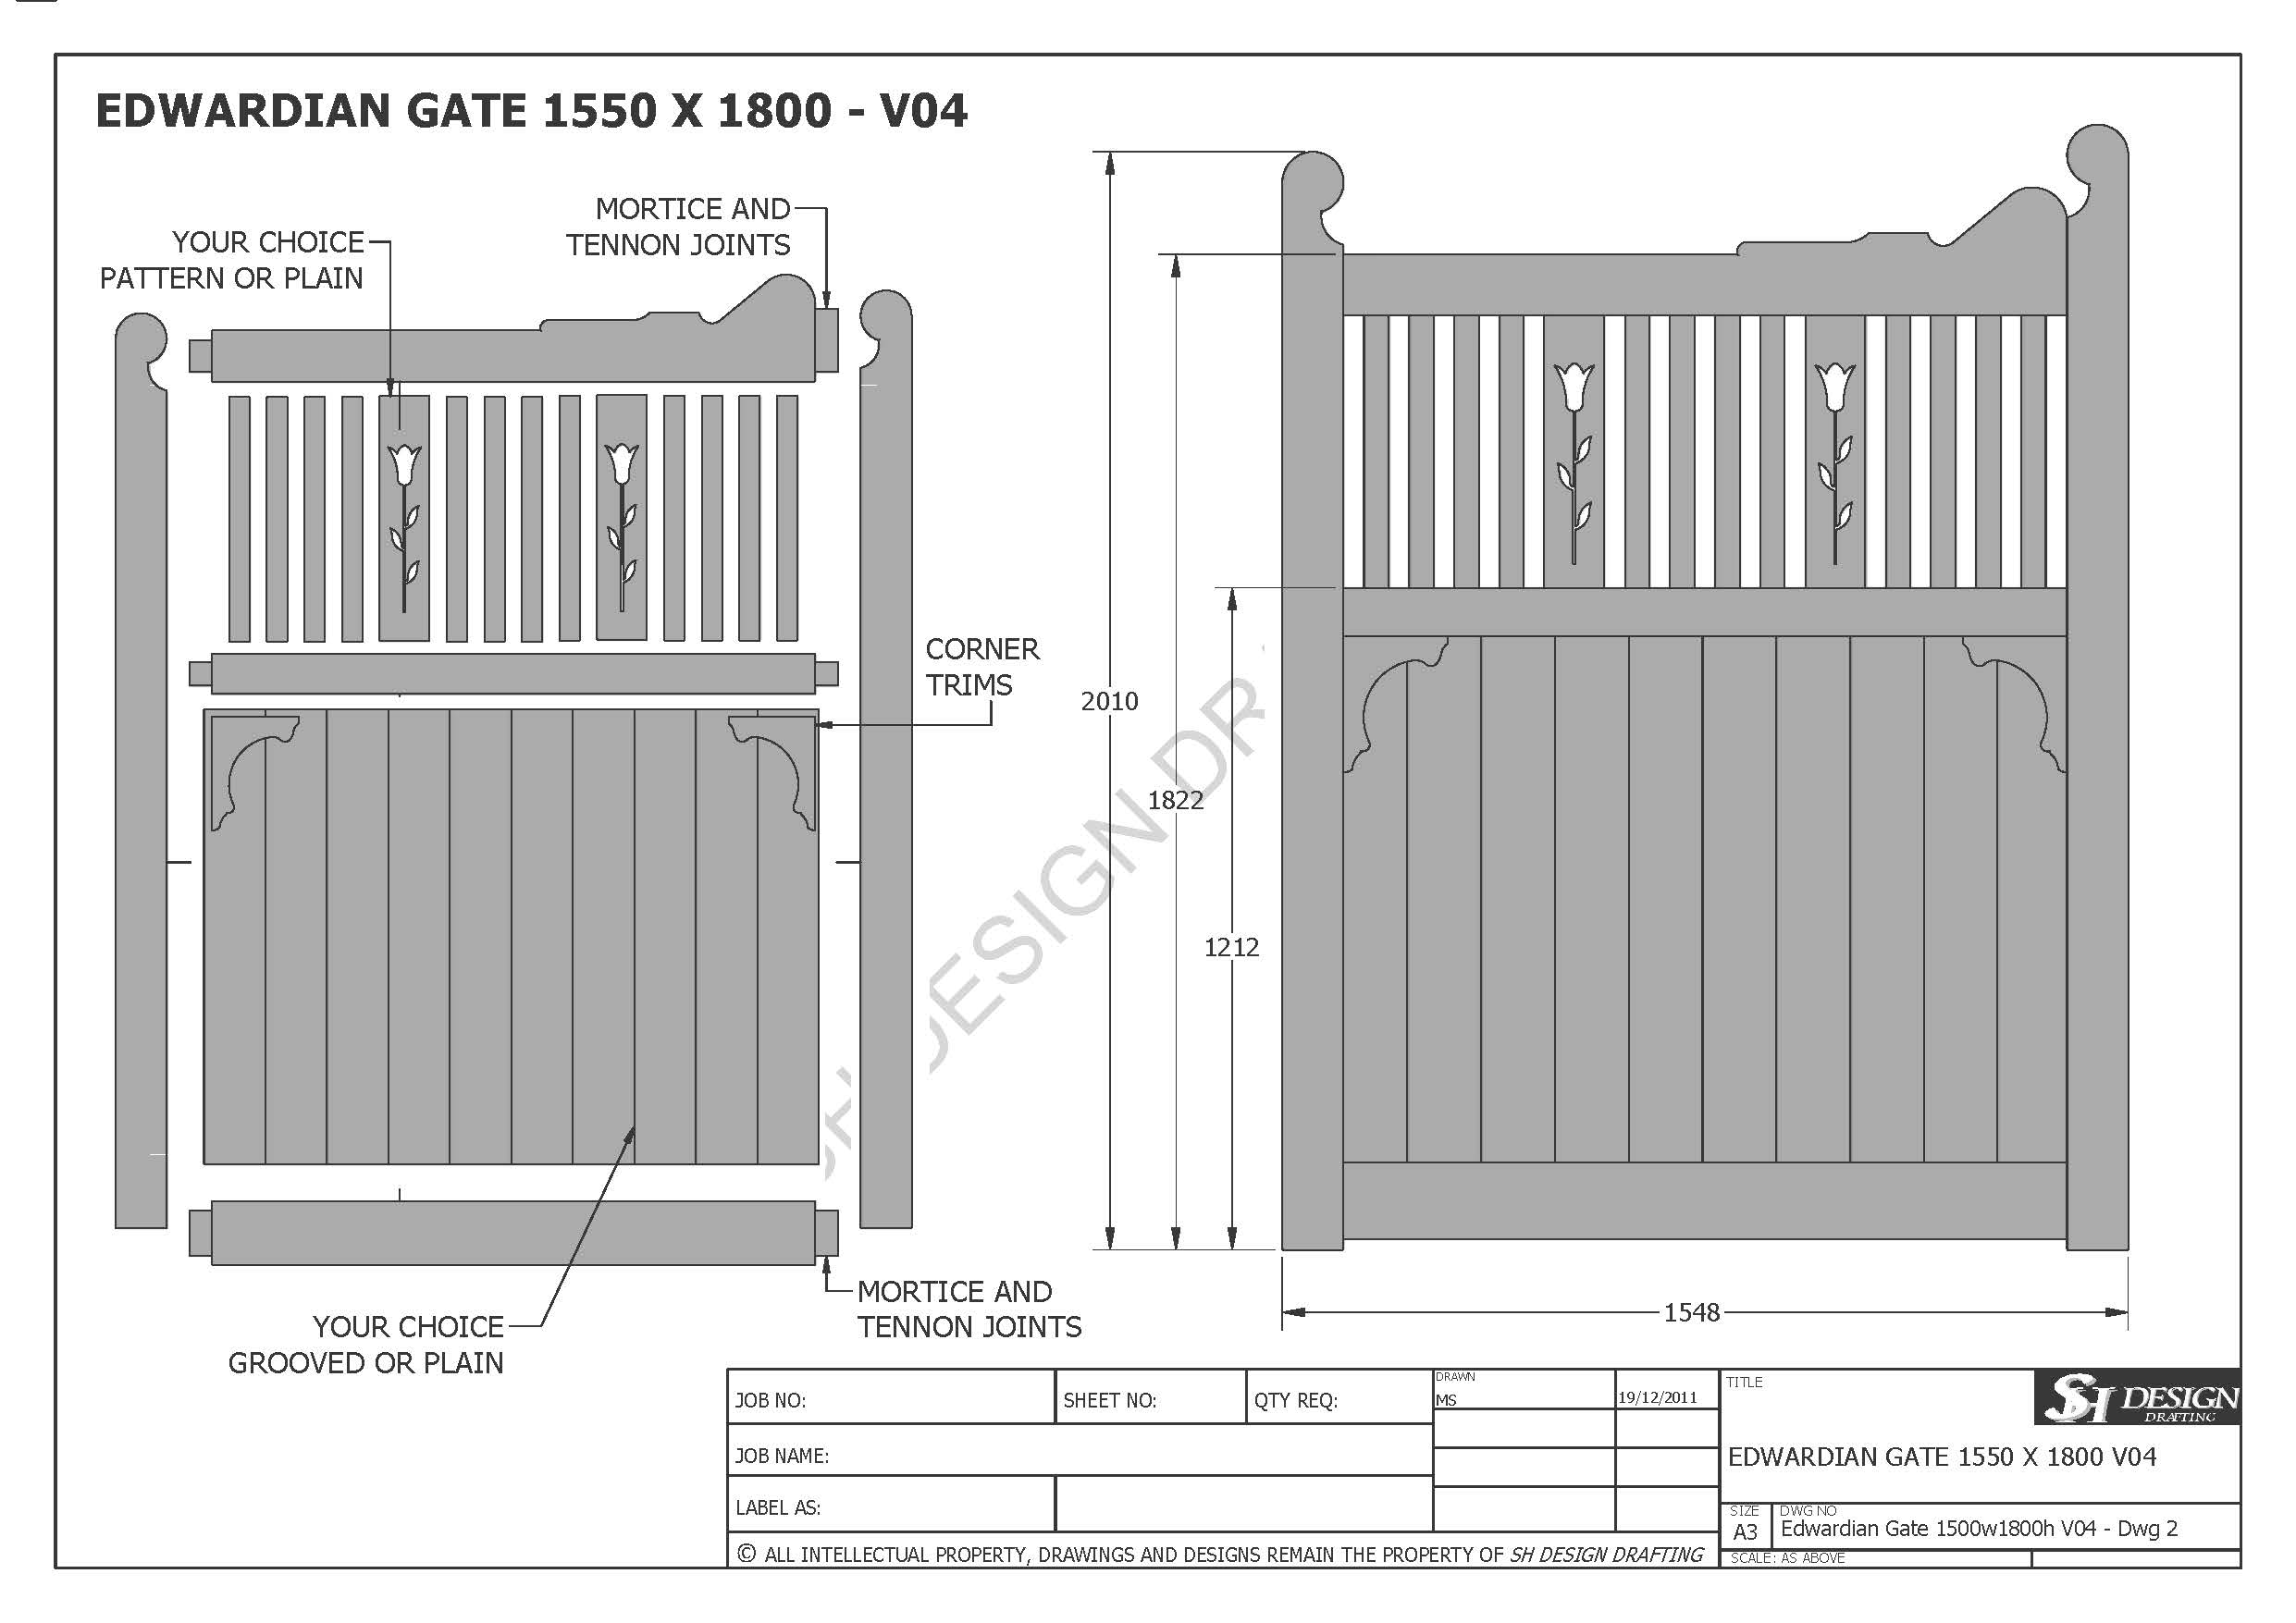 Edwardian Gate 1500 x 1800 - V04